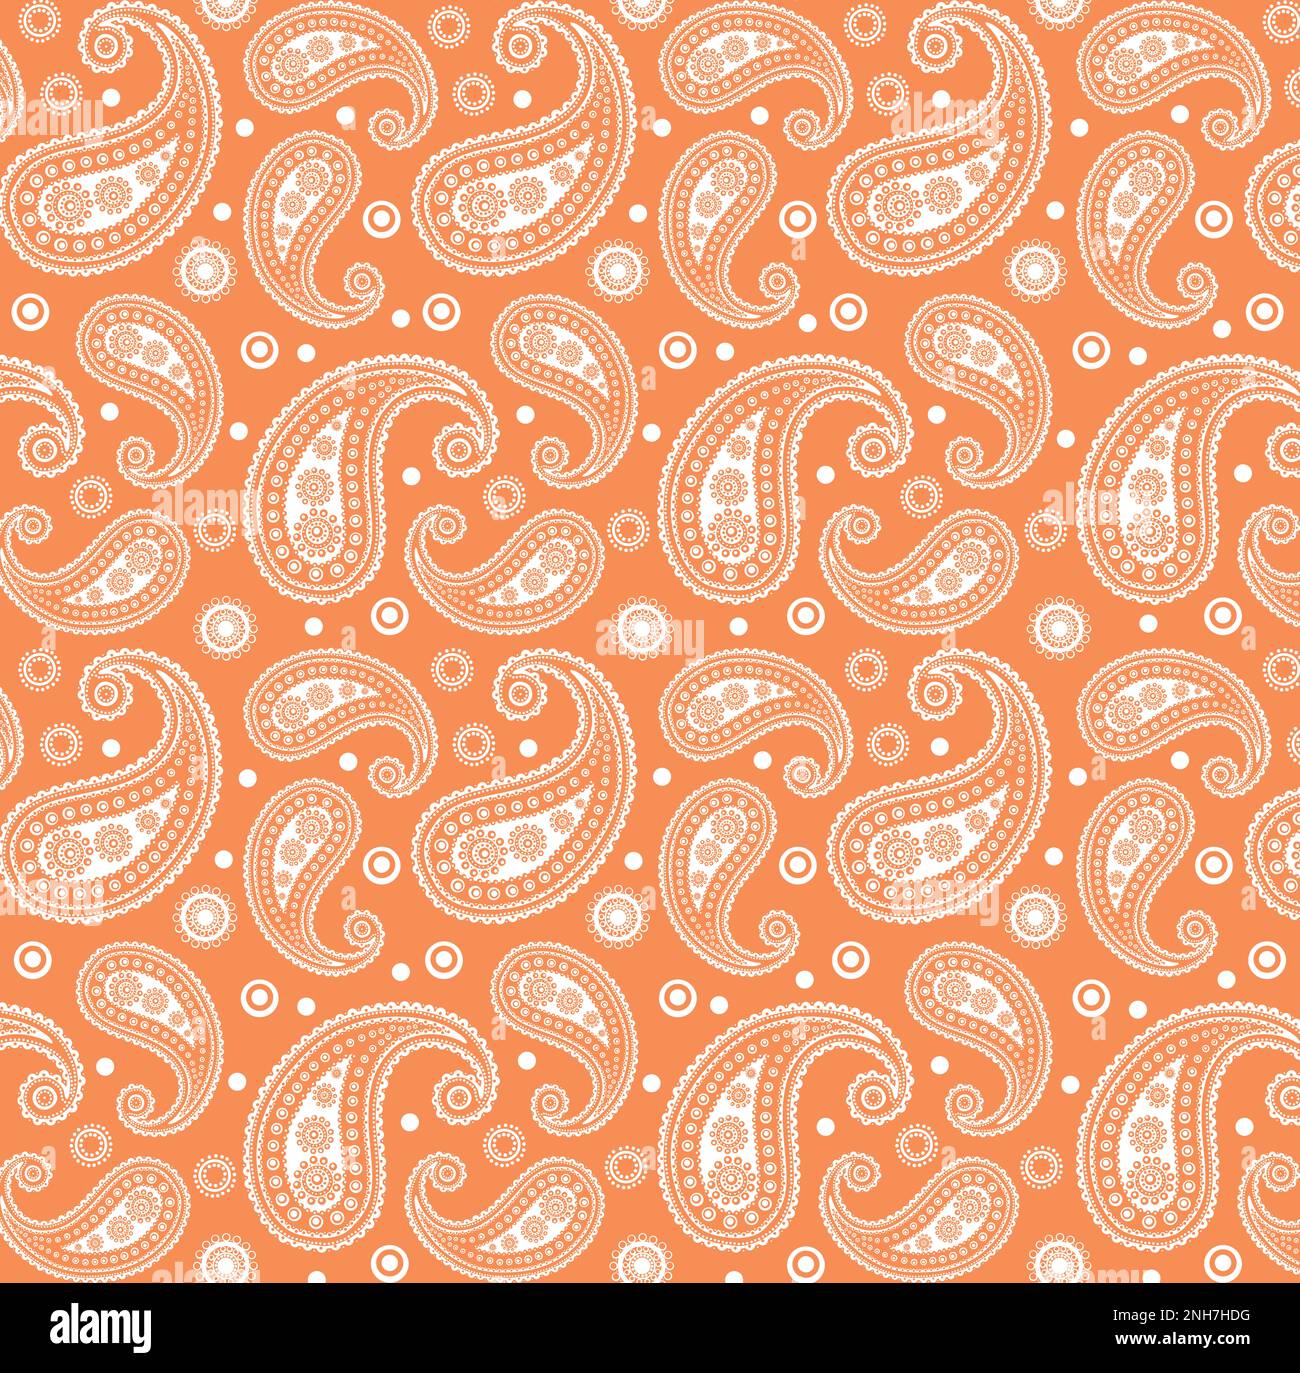 https://c8.alamy.com/comp/2NH7HDG/orange-white-funky-60s-70s-paisley-pattern-2NH7HDG.jpg